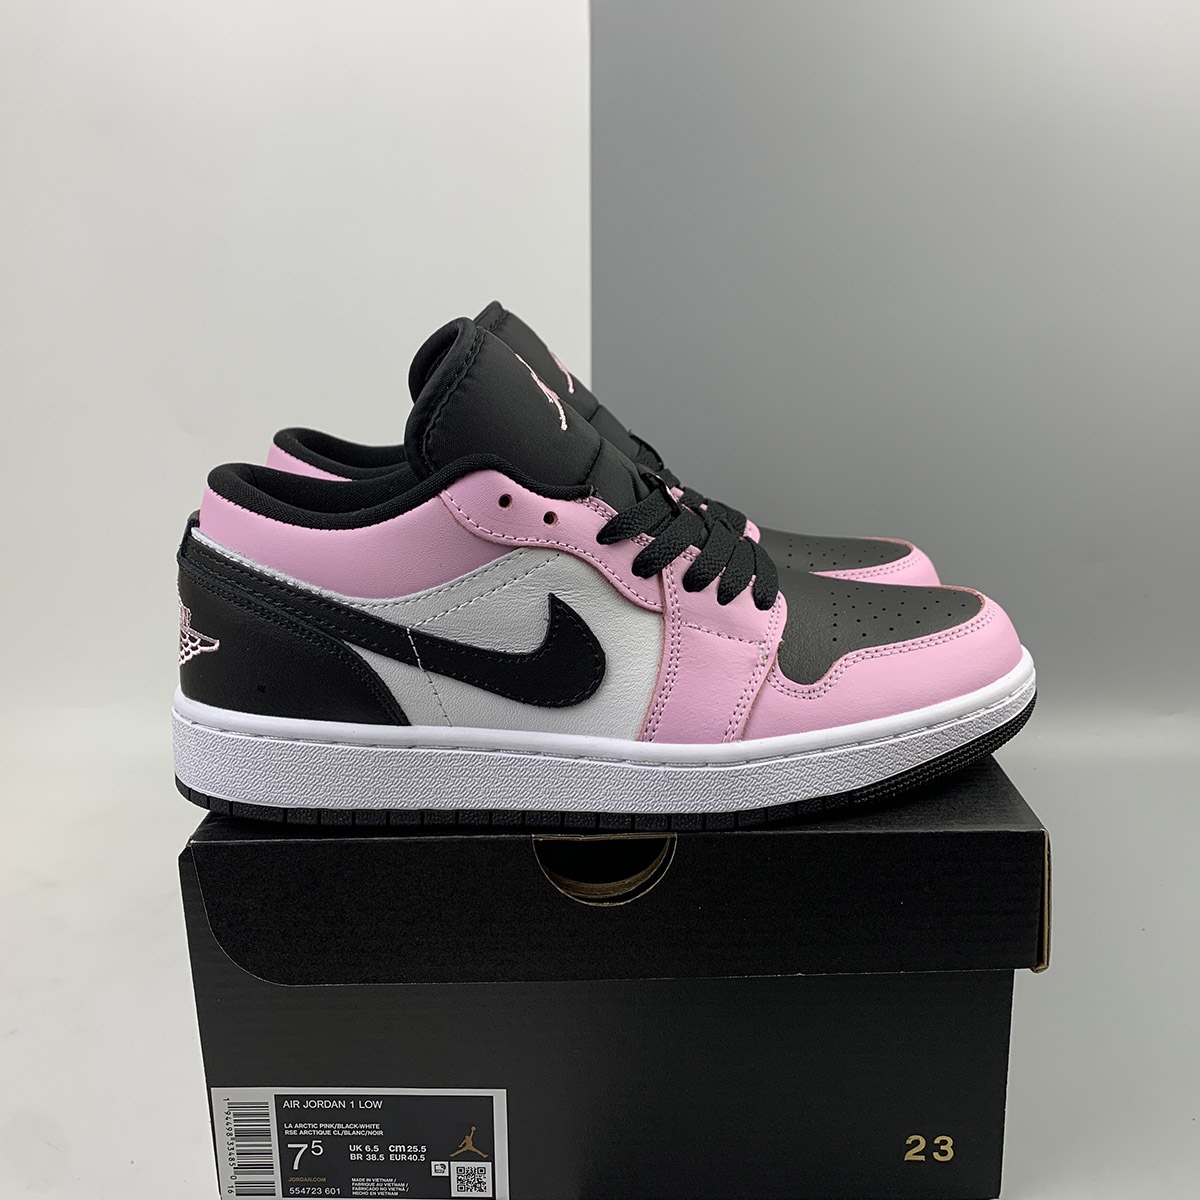 Air Jordan 1 Low Gs “light Arctic Pink” 554723 601 For Sale The Sole Line